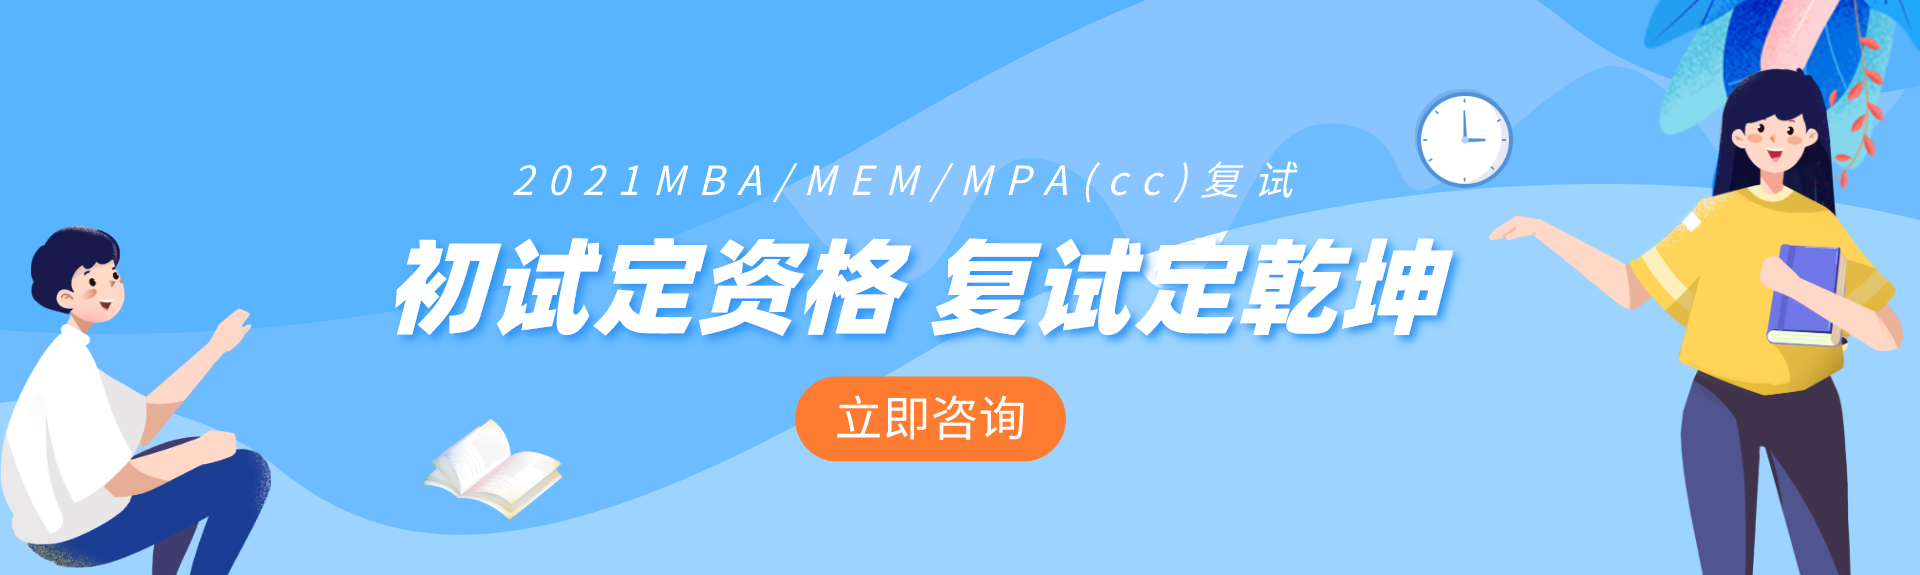 2021MBA/MEM/MPA(cc) 复试 